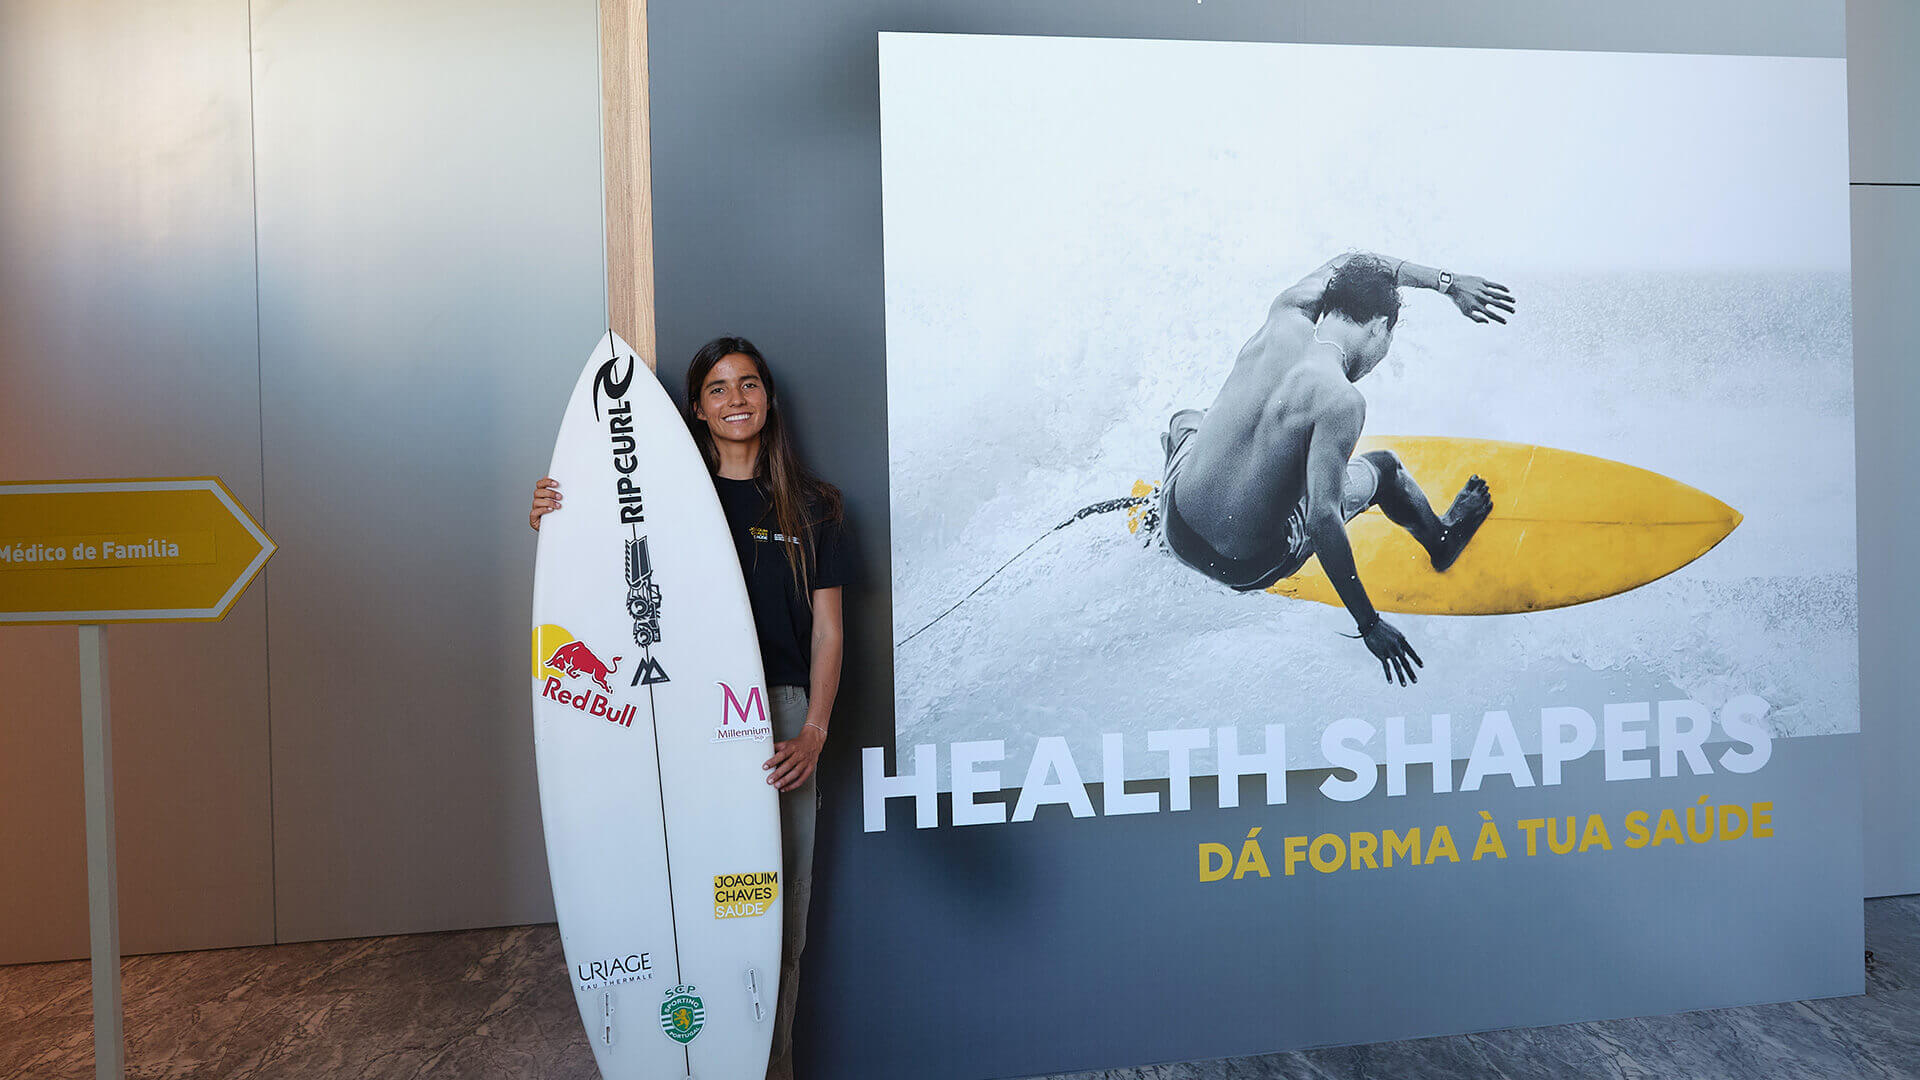 Teresa Bonvalot with her surfboard